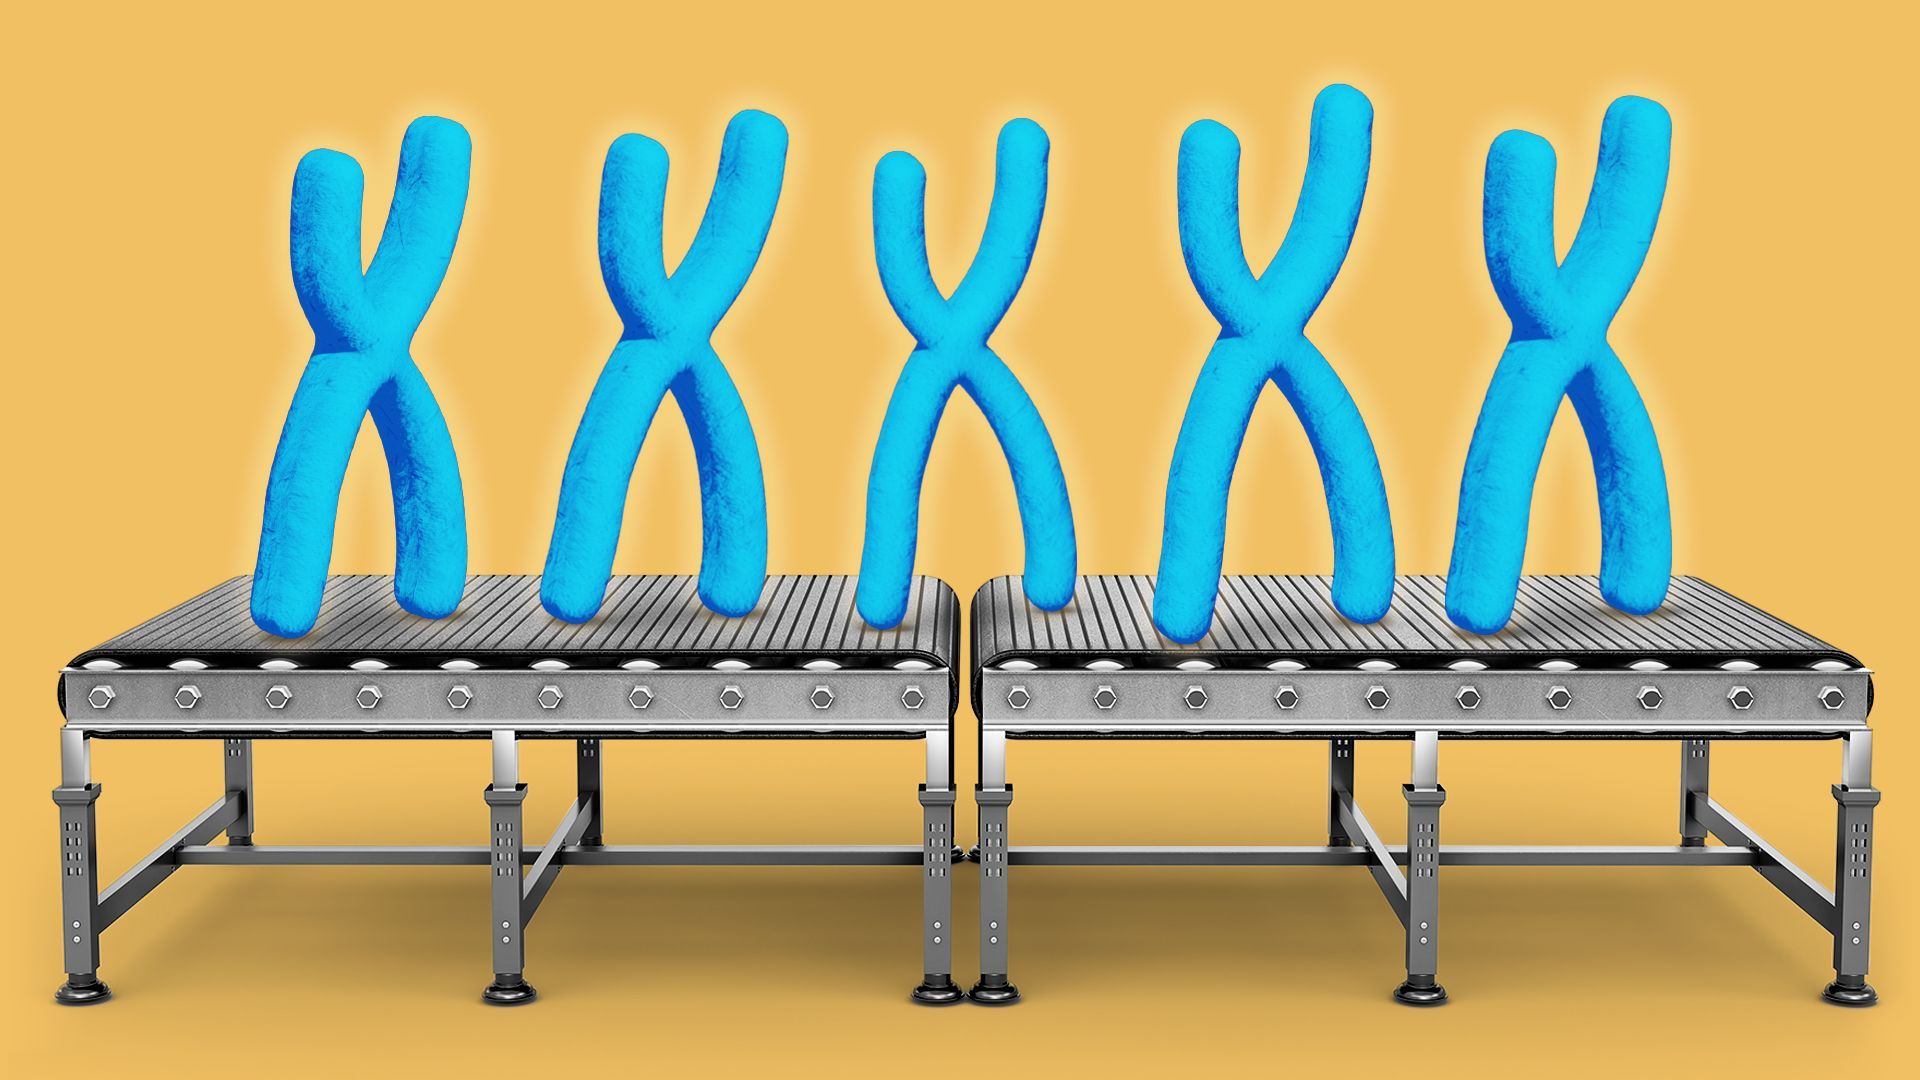 Illustration of chromosomes on a conveyor belt